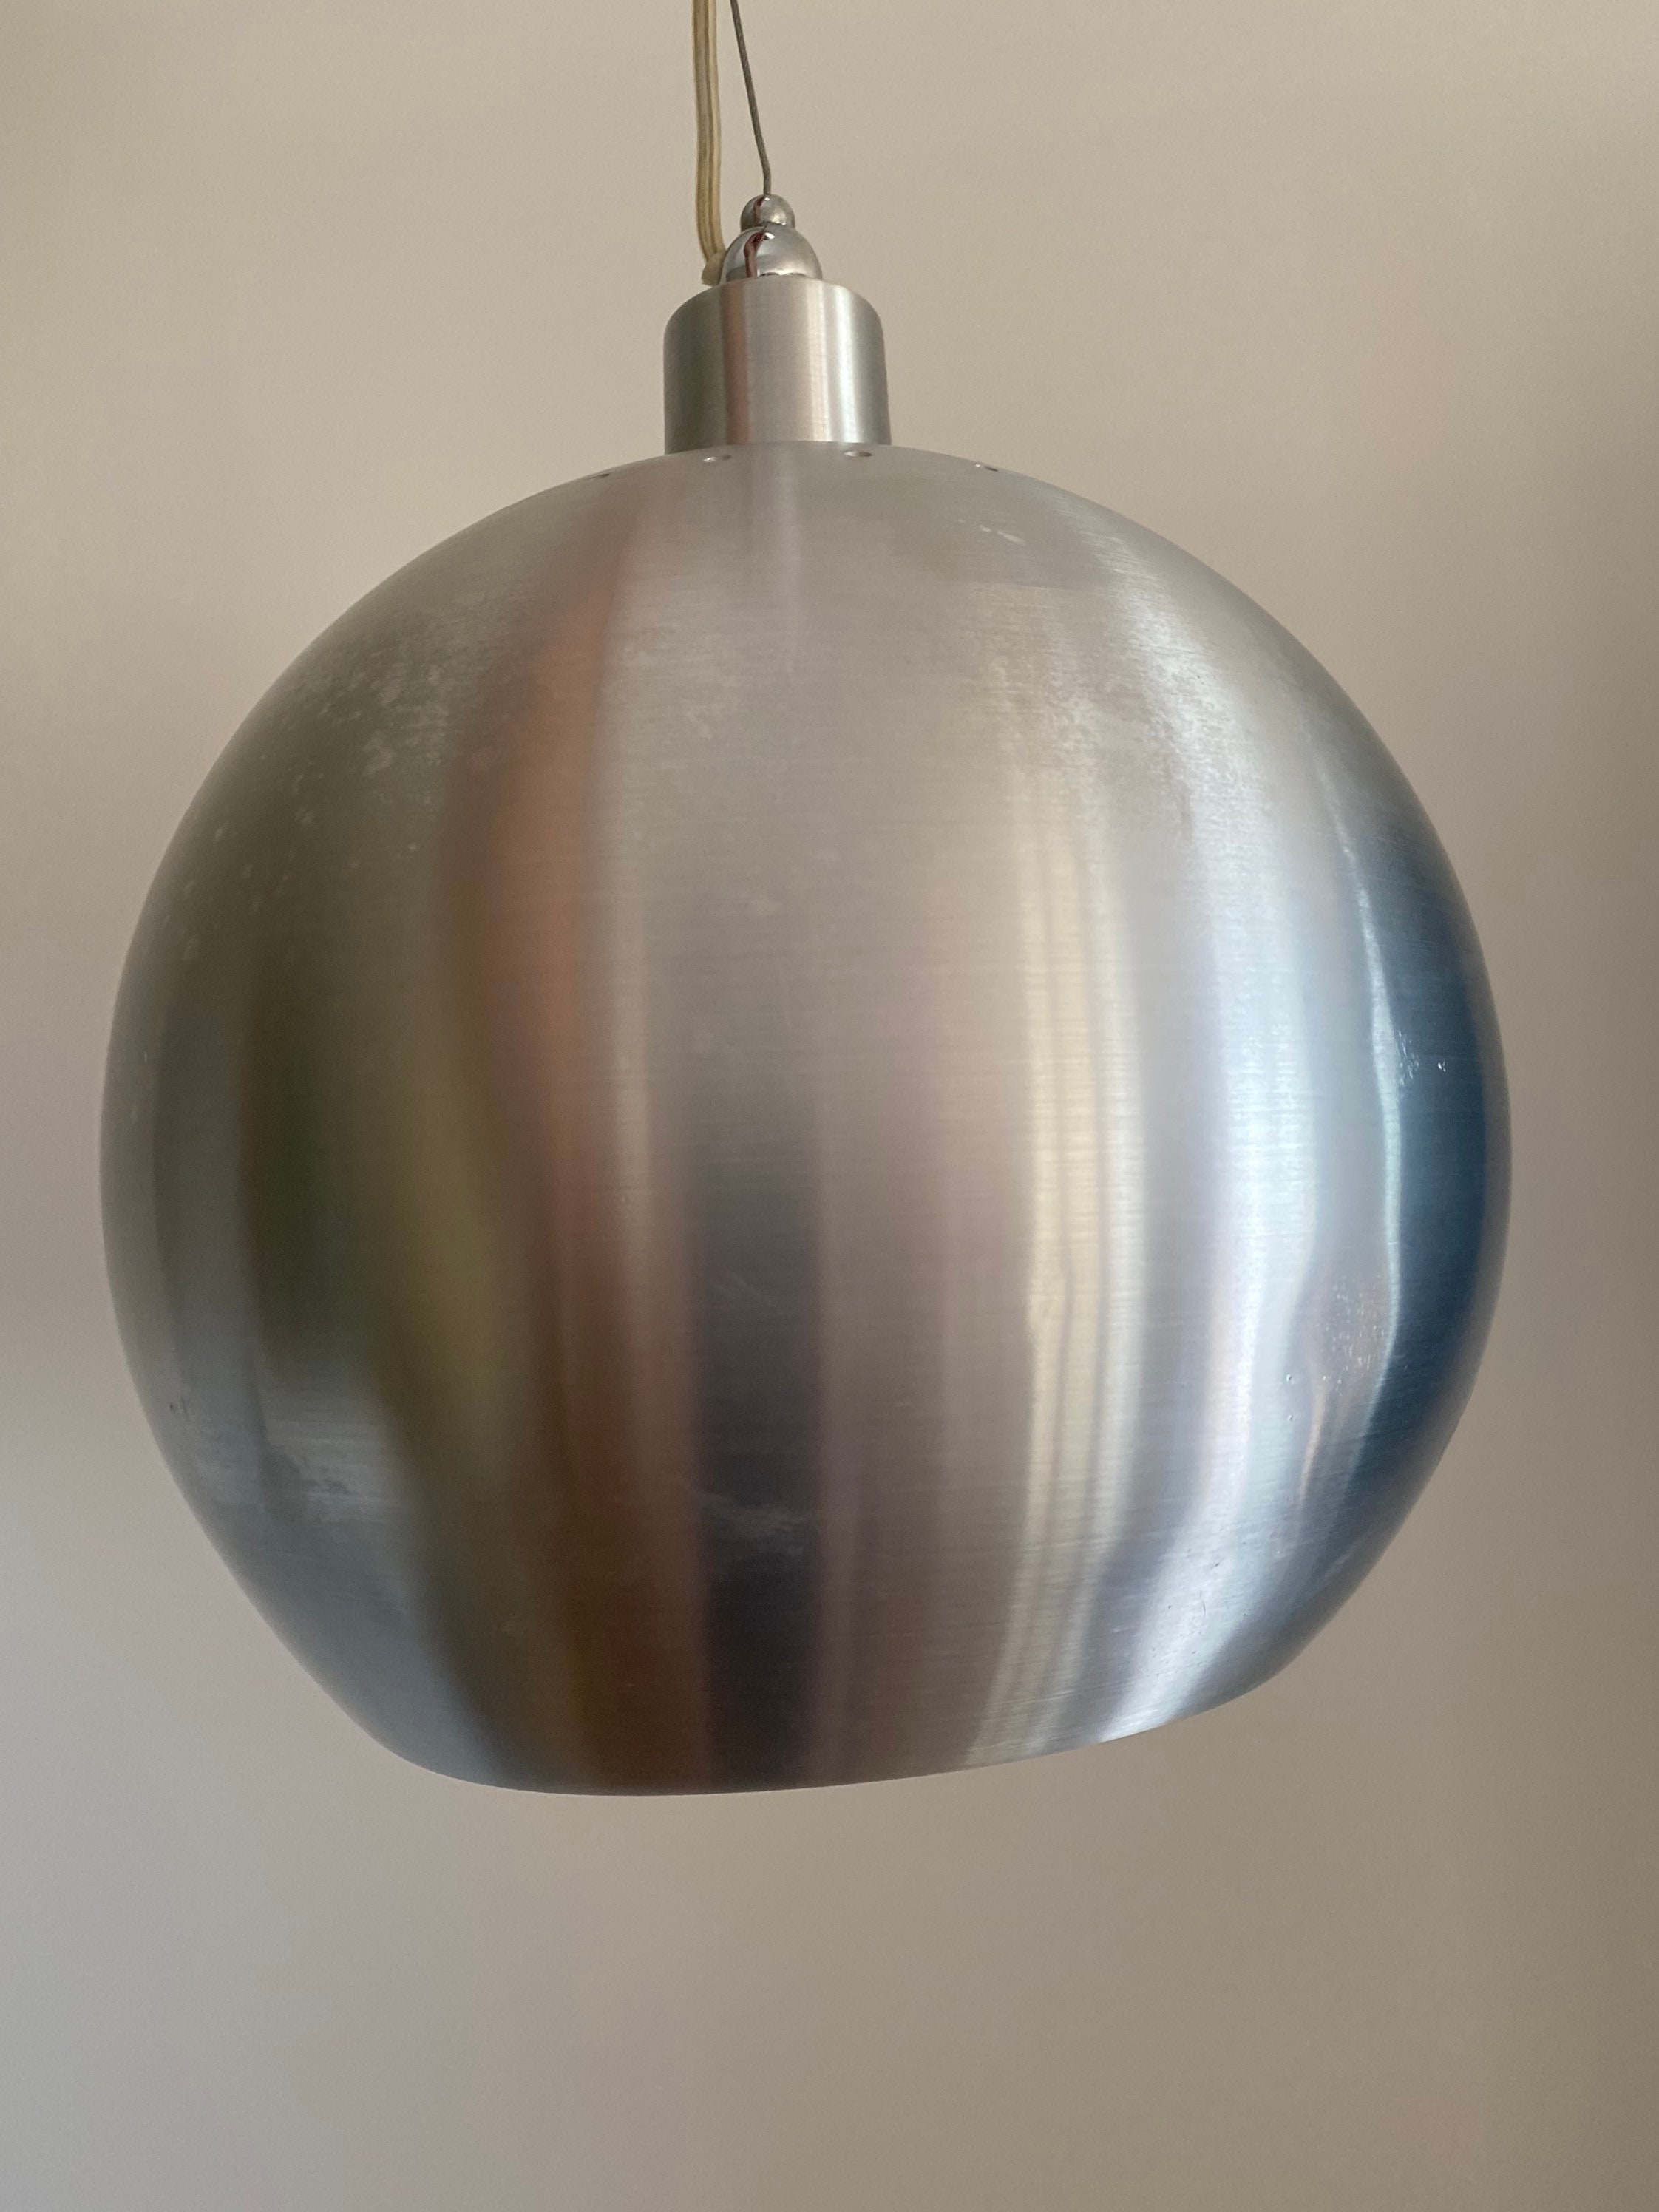 Lampe Suspension Aluminor Boule Aluminium Vintage 1970 Design Space Age 10 Luminaire Pour Plafond